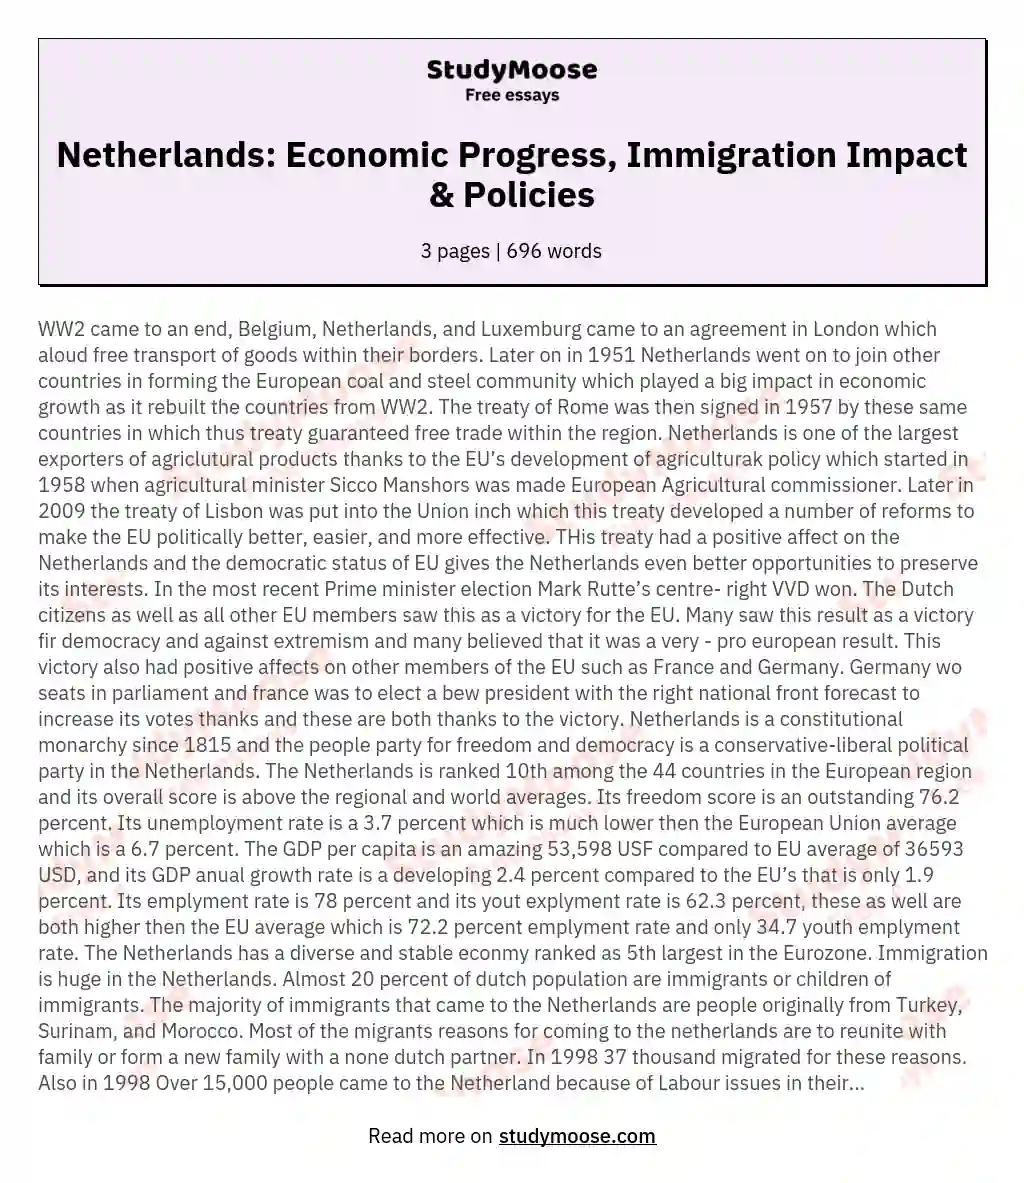 Netherlands: Economic Progress, Immigration Impact & Policies essay